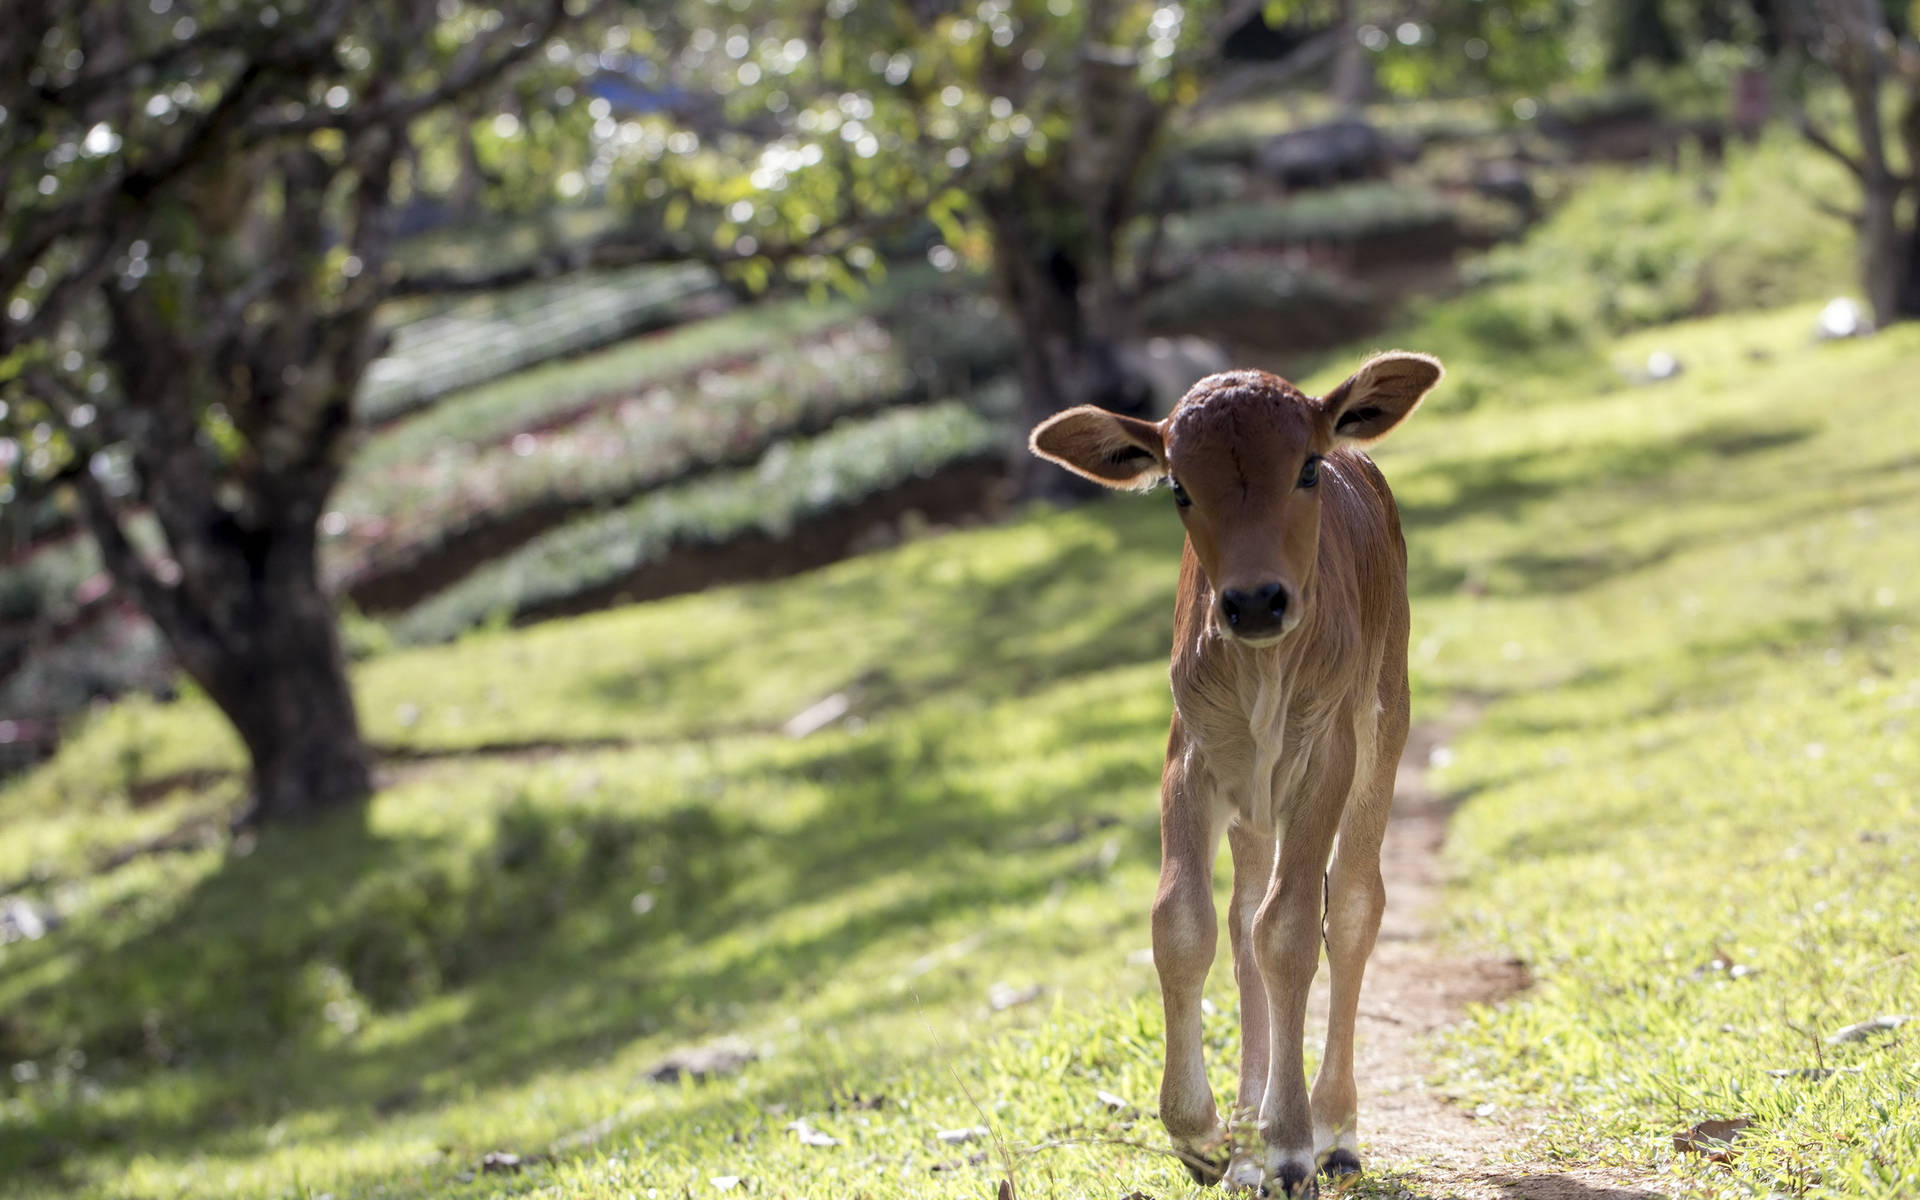 Cute Skinny Cow Walking On Grass Path